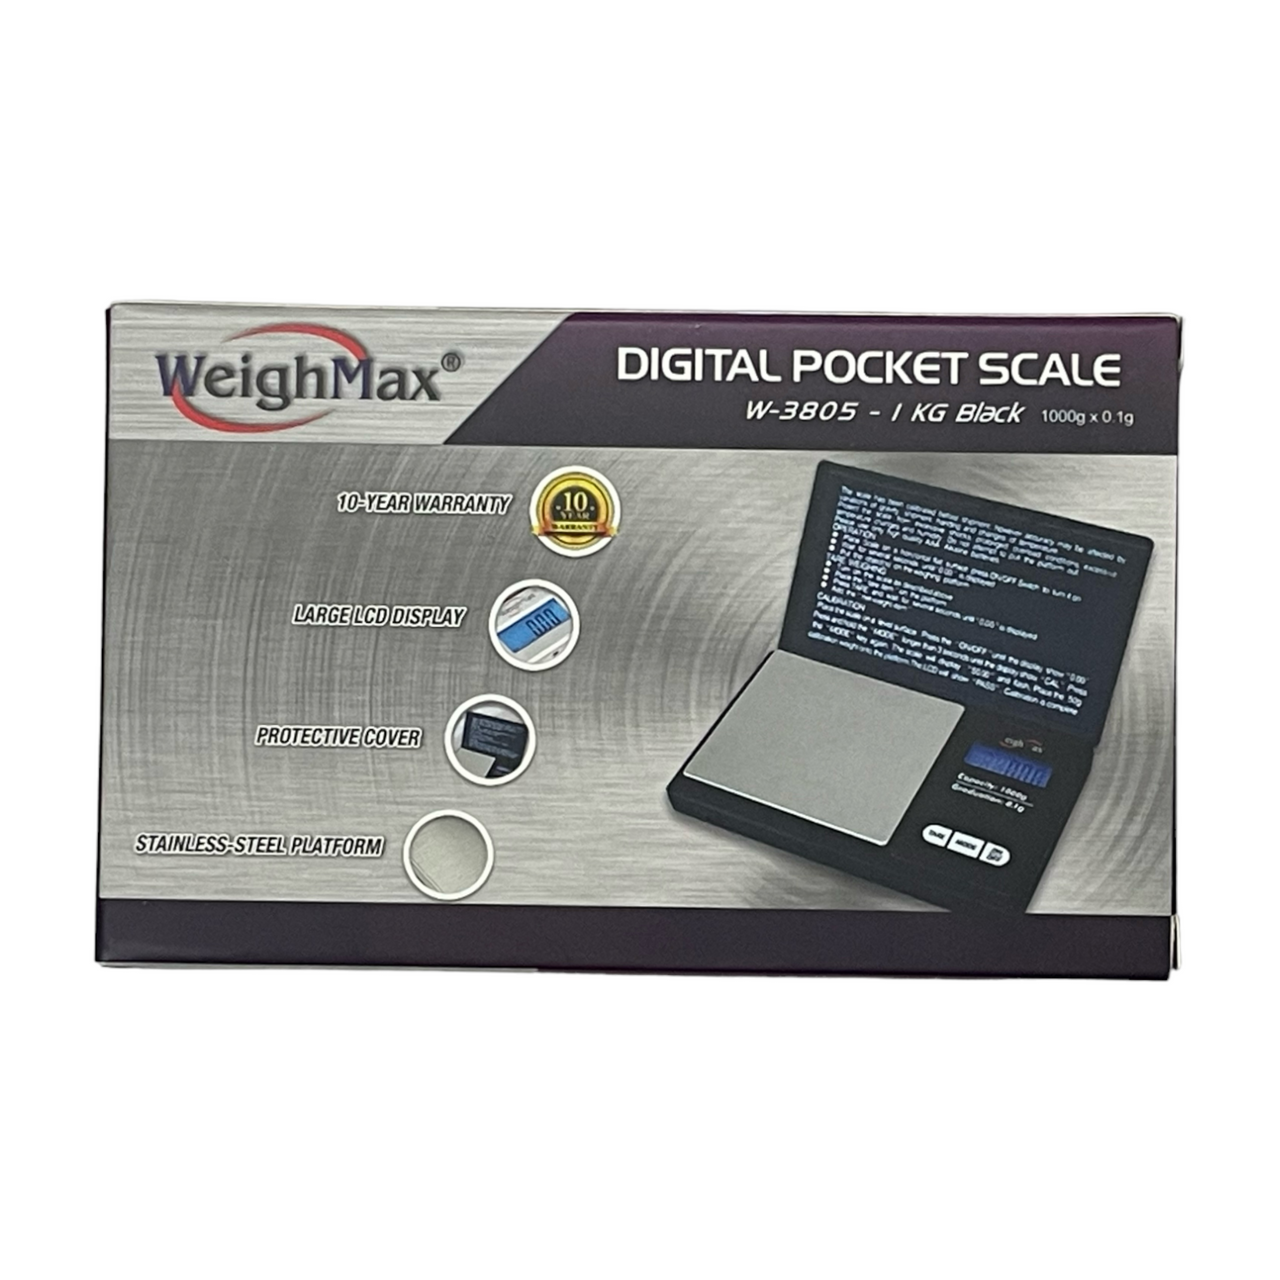 Weighmax SM-100 Digital Pocket Scale